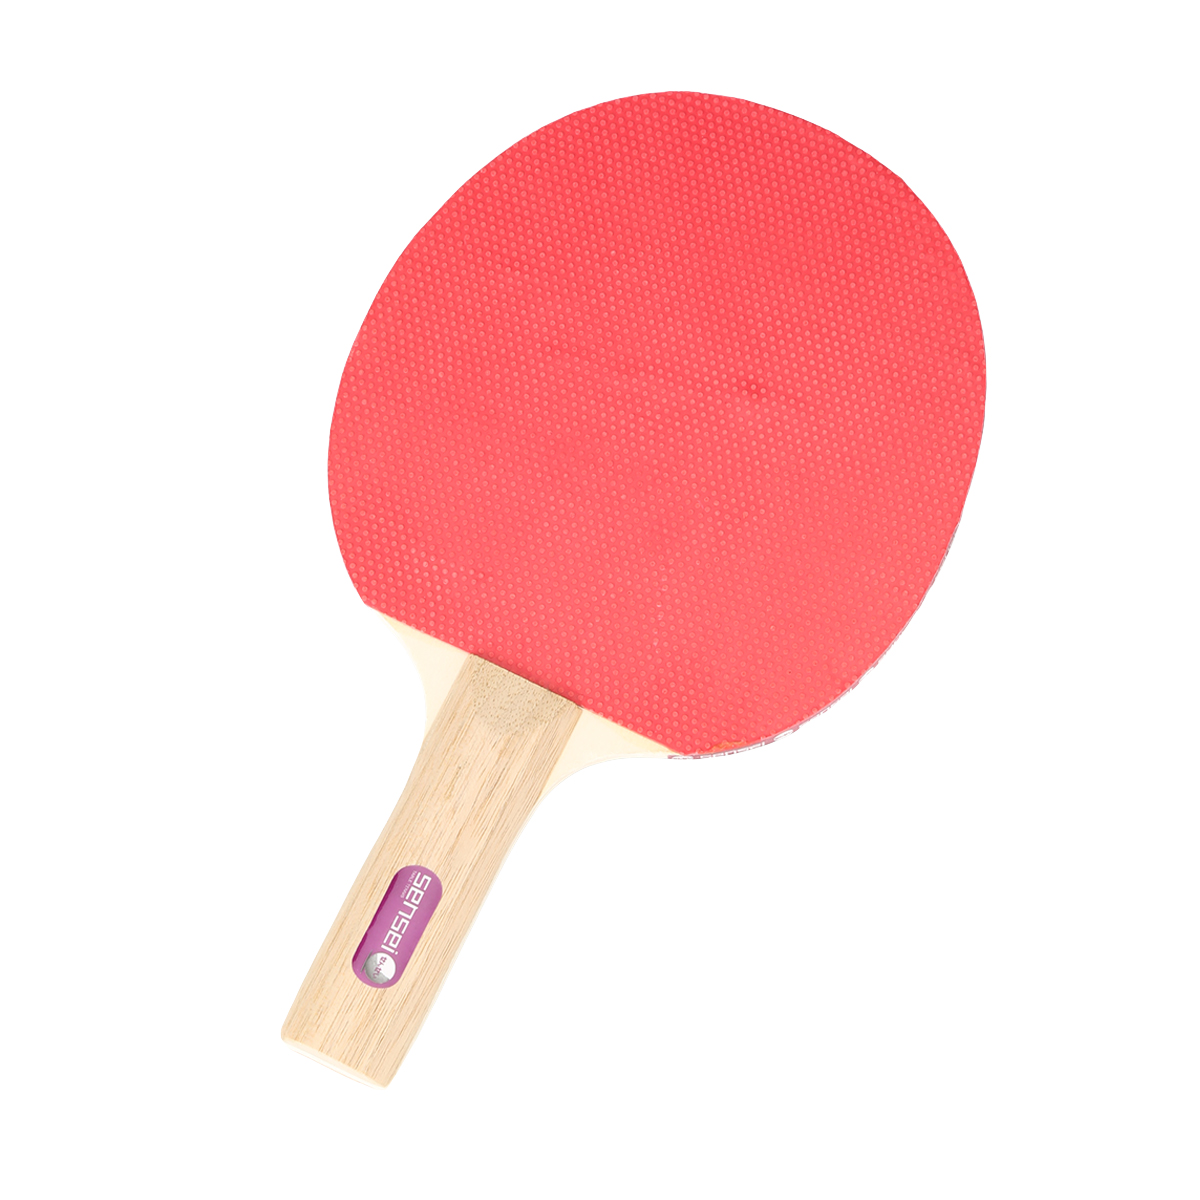 Paleta de Ping-Pong Sensei 1 Star,  image number null